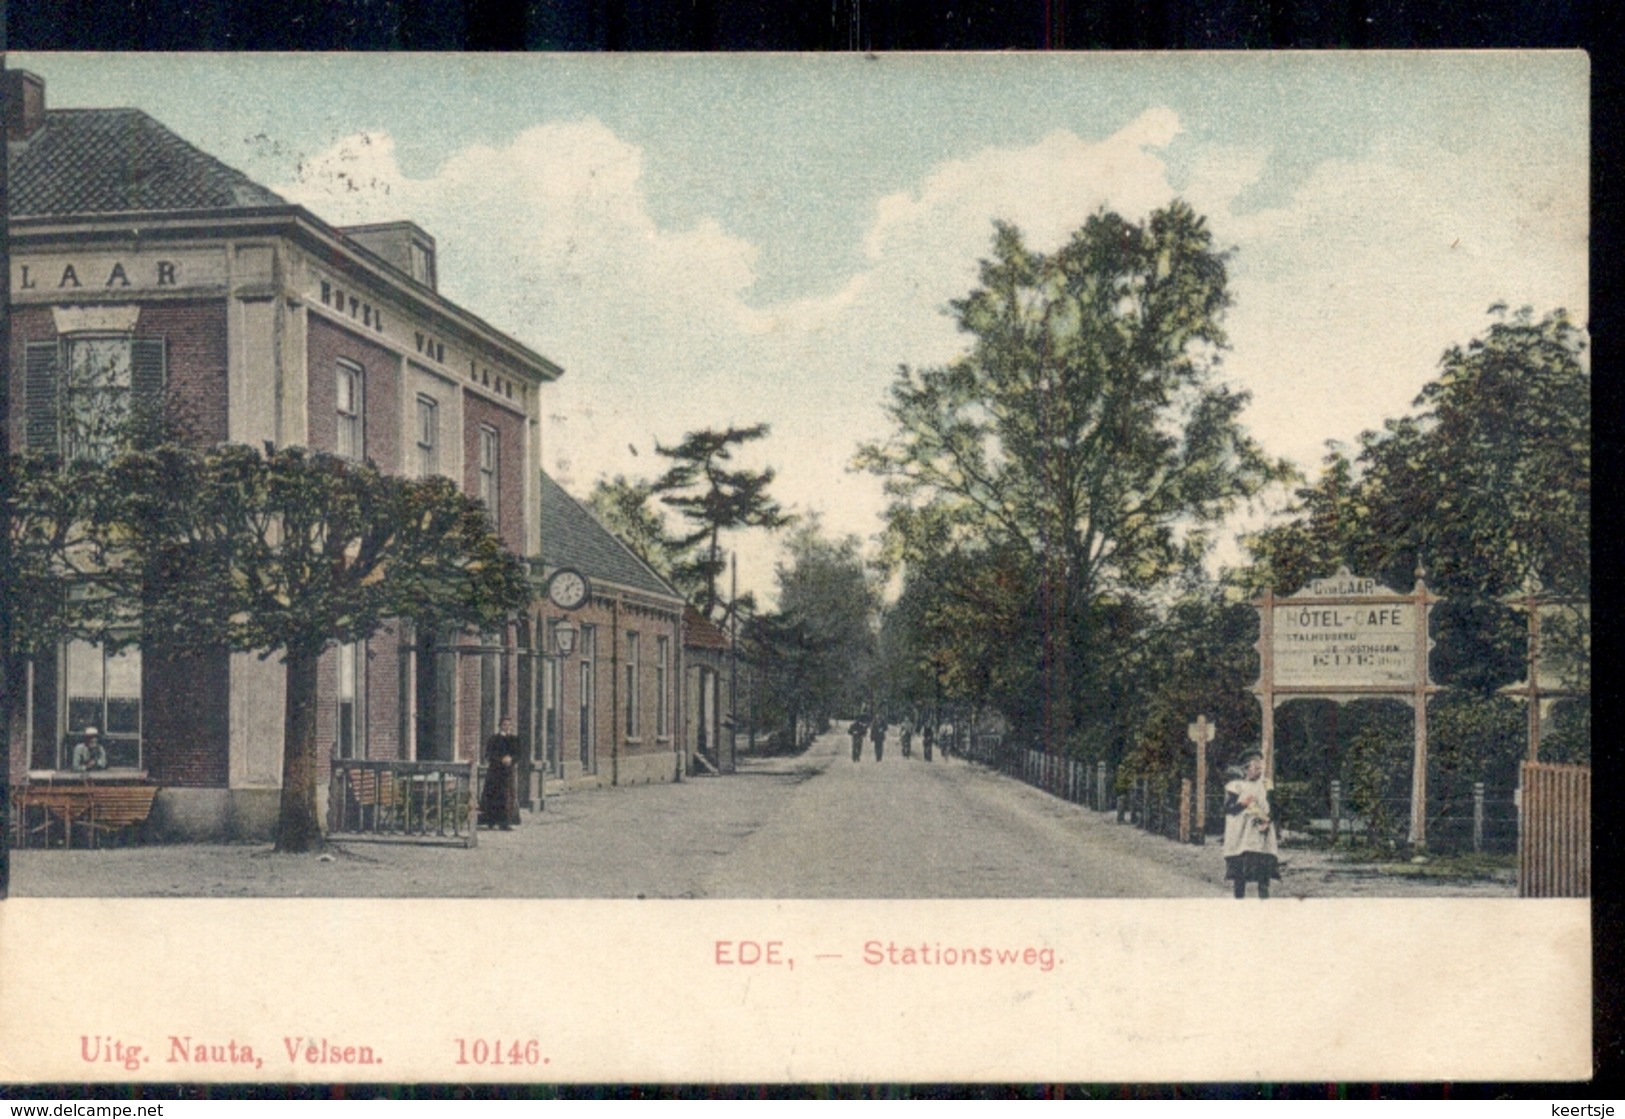 Ede - Stationsweg - C Van Laar Hotel Cafe - 1907 - Ede